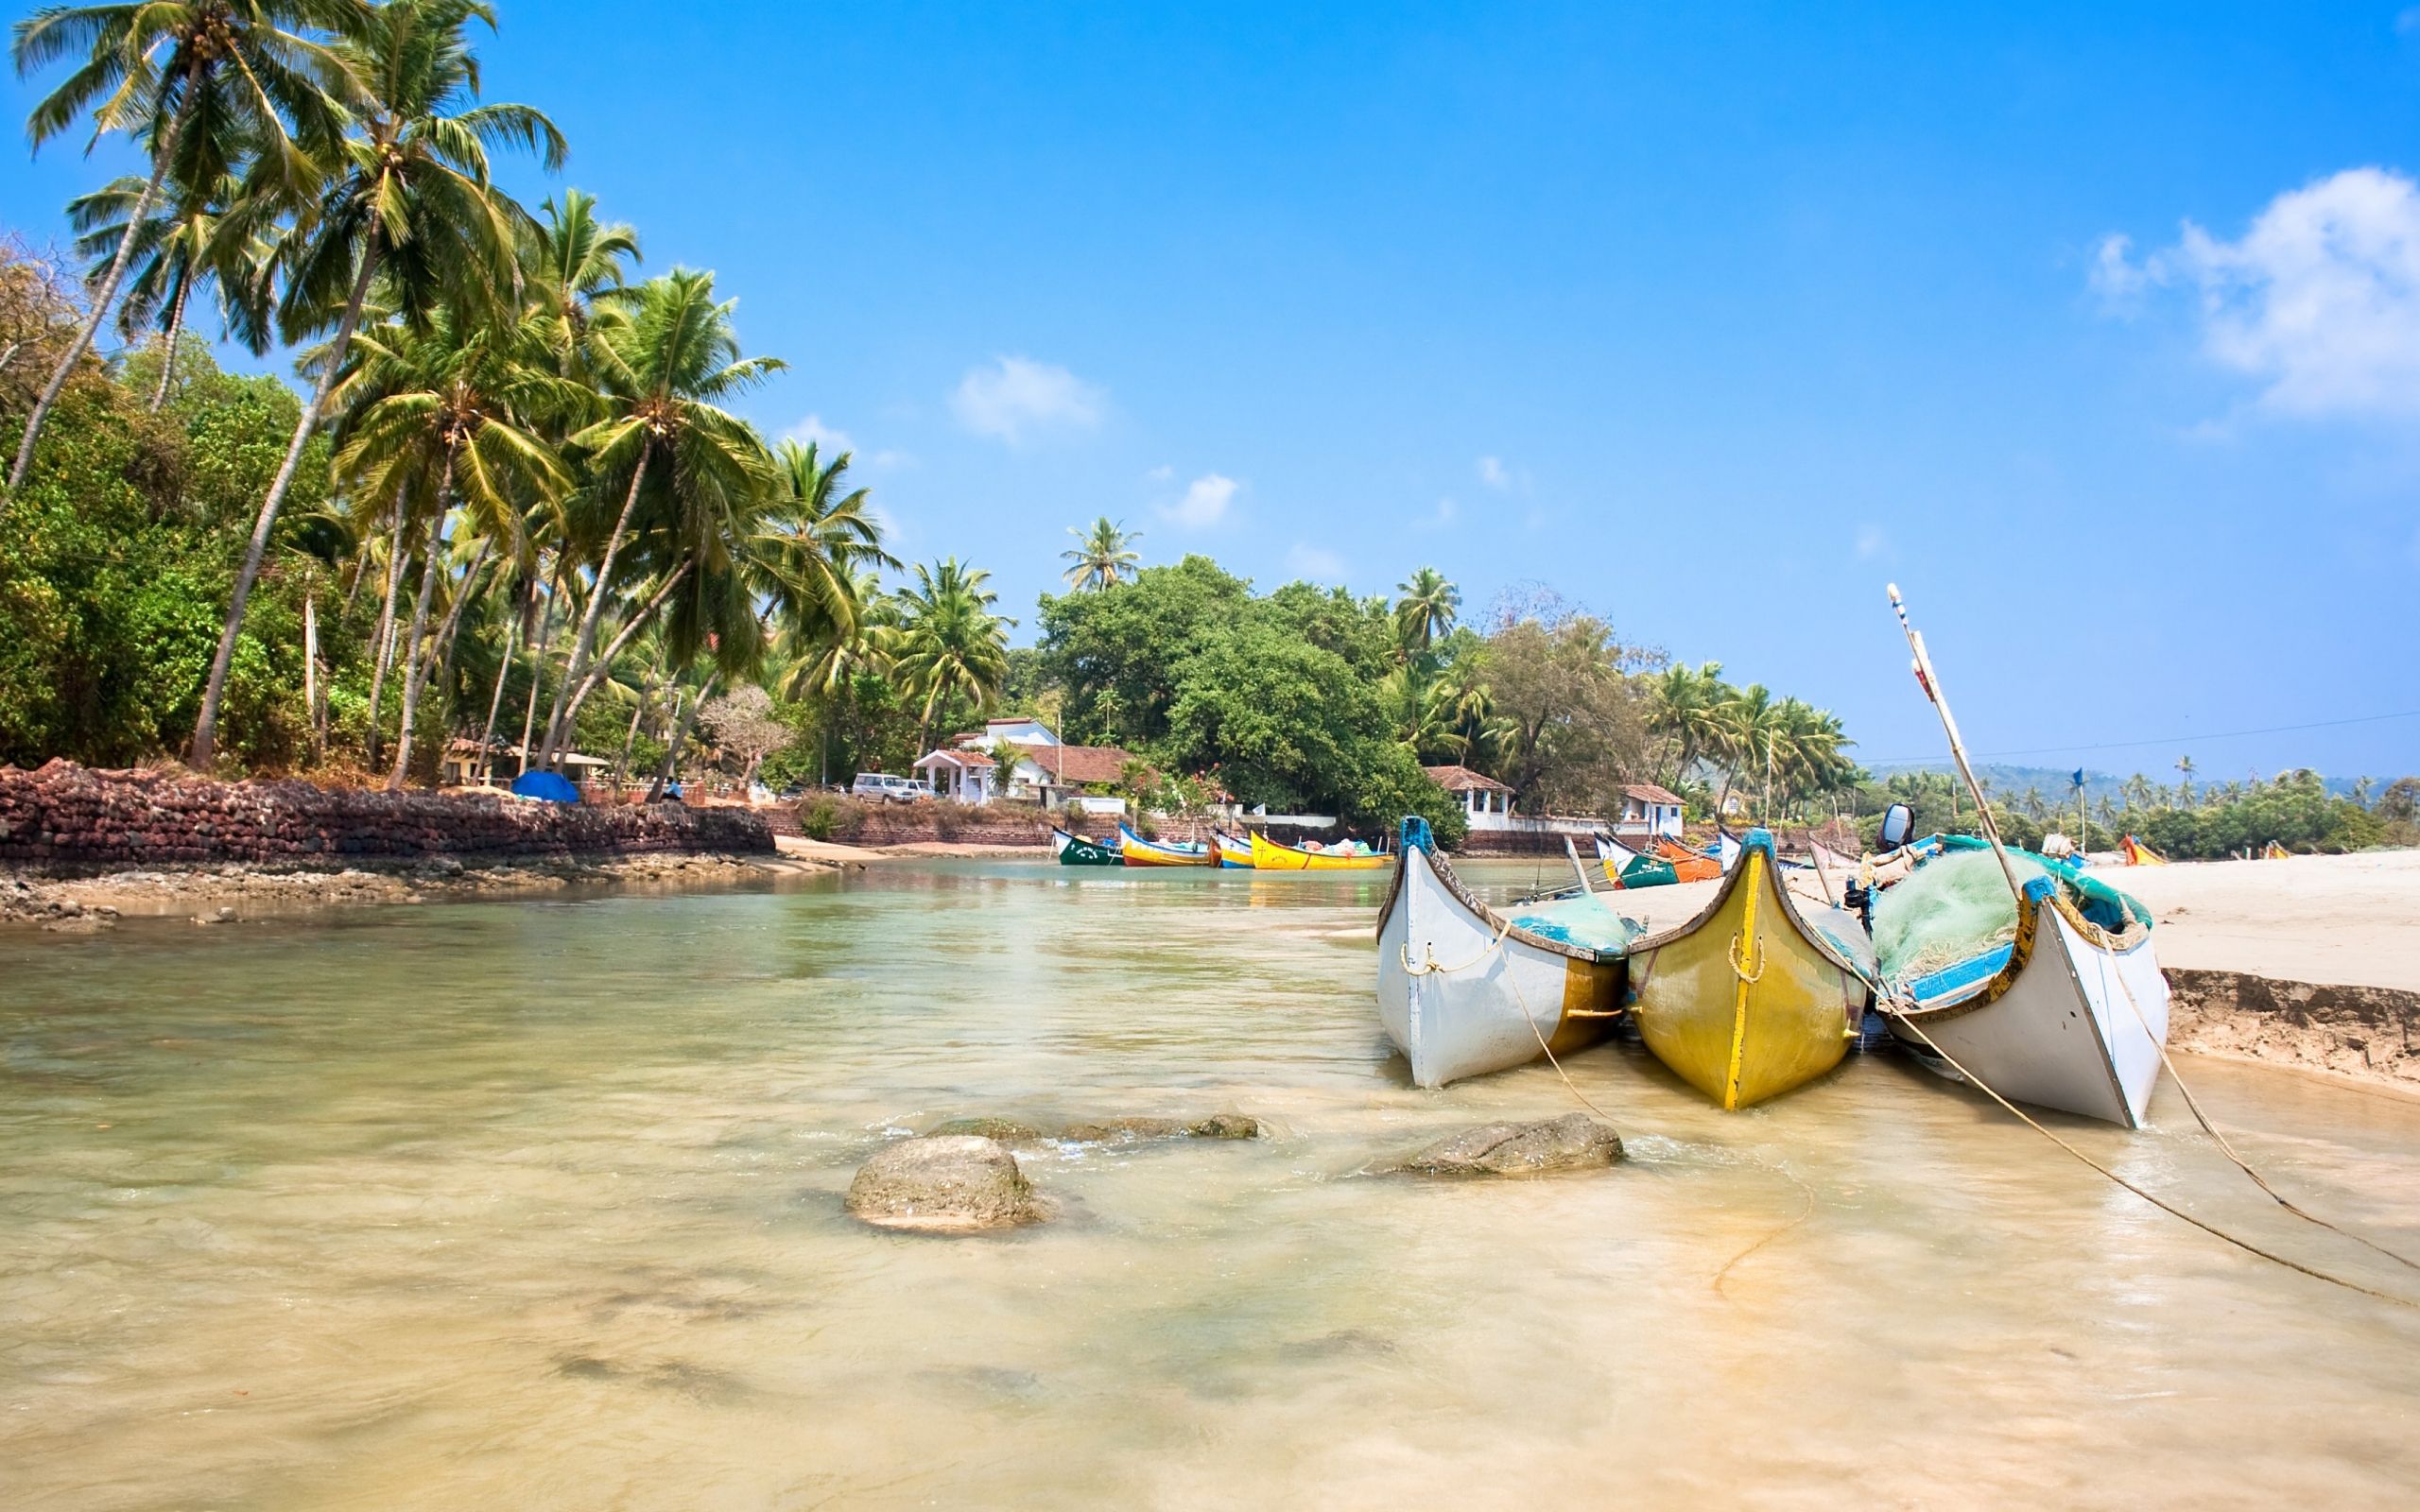 Download Goa, 5k, 4k wallpaper, India, Indian ocean, palms, boats